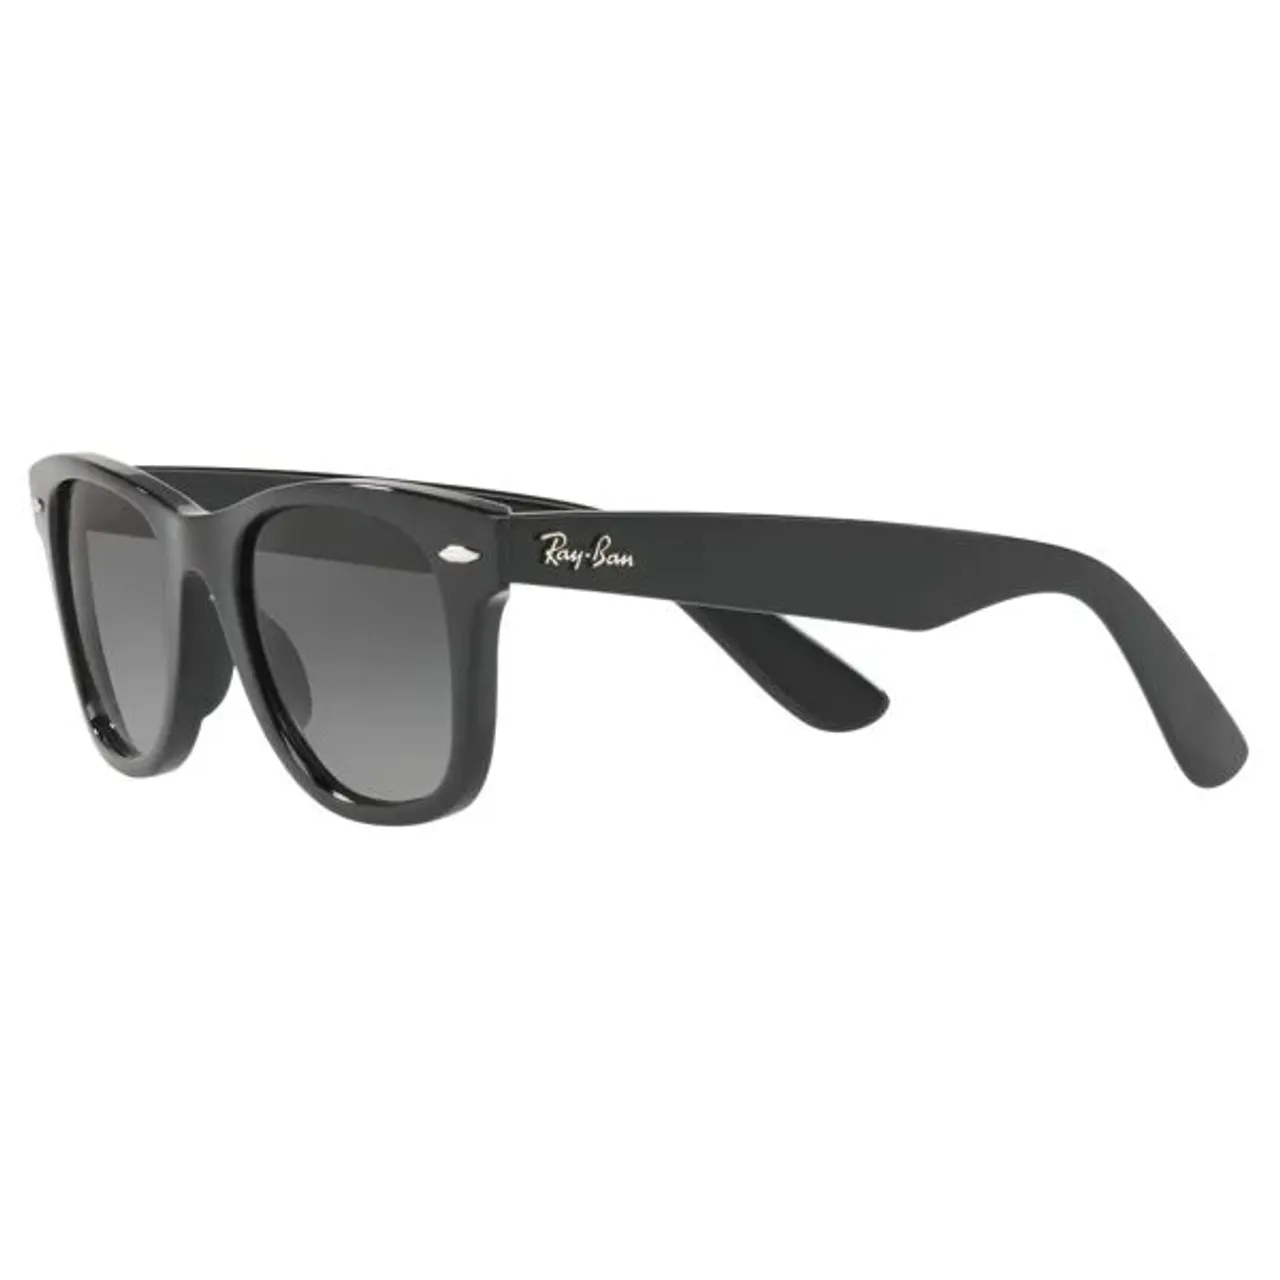 Ray-Ban Junior RJ9066S Wayfarer Sunglasses - Black/Grey Gradient - Female